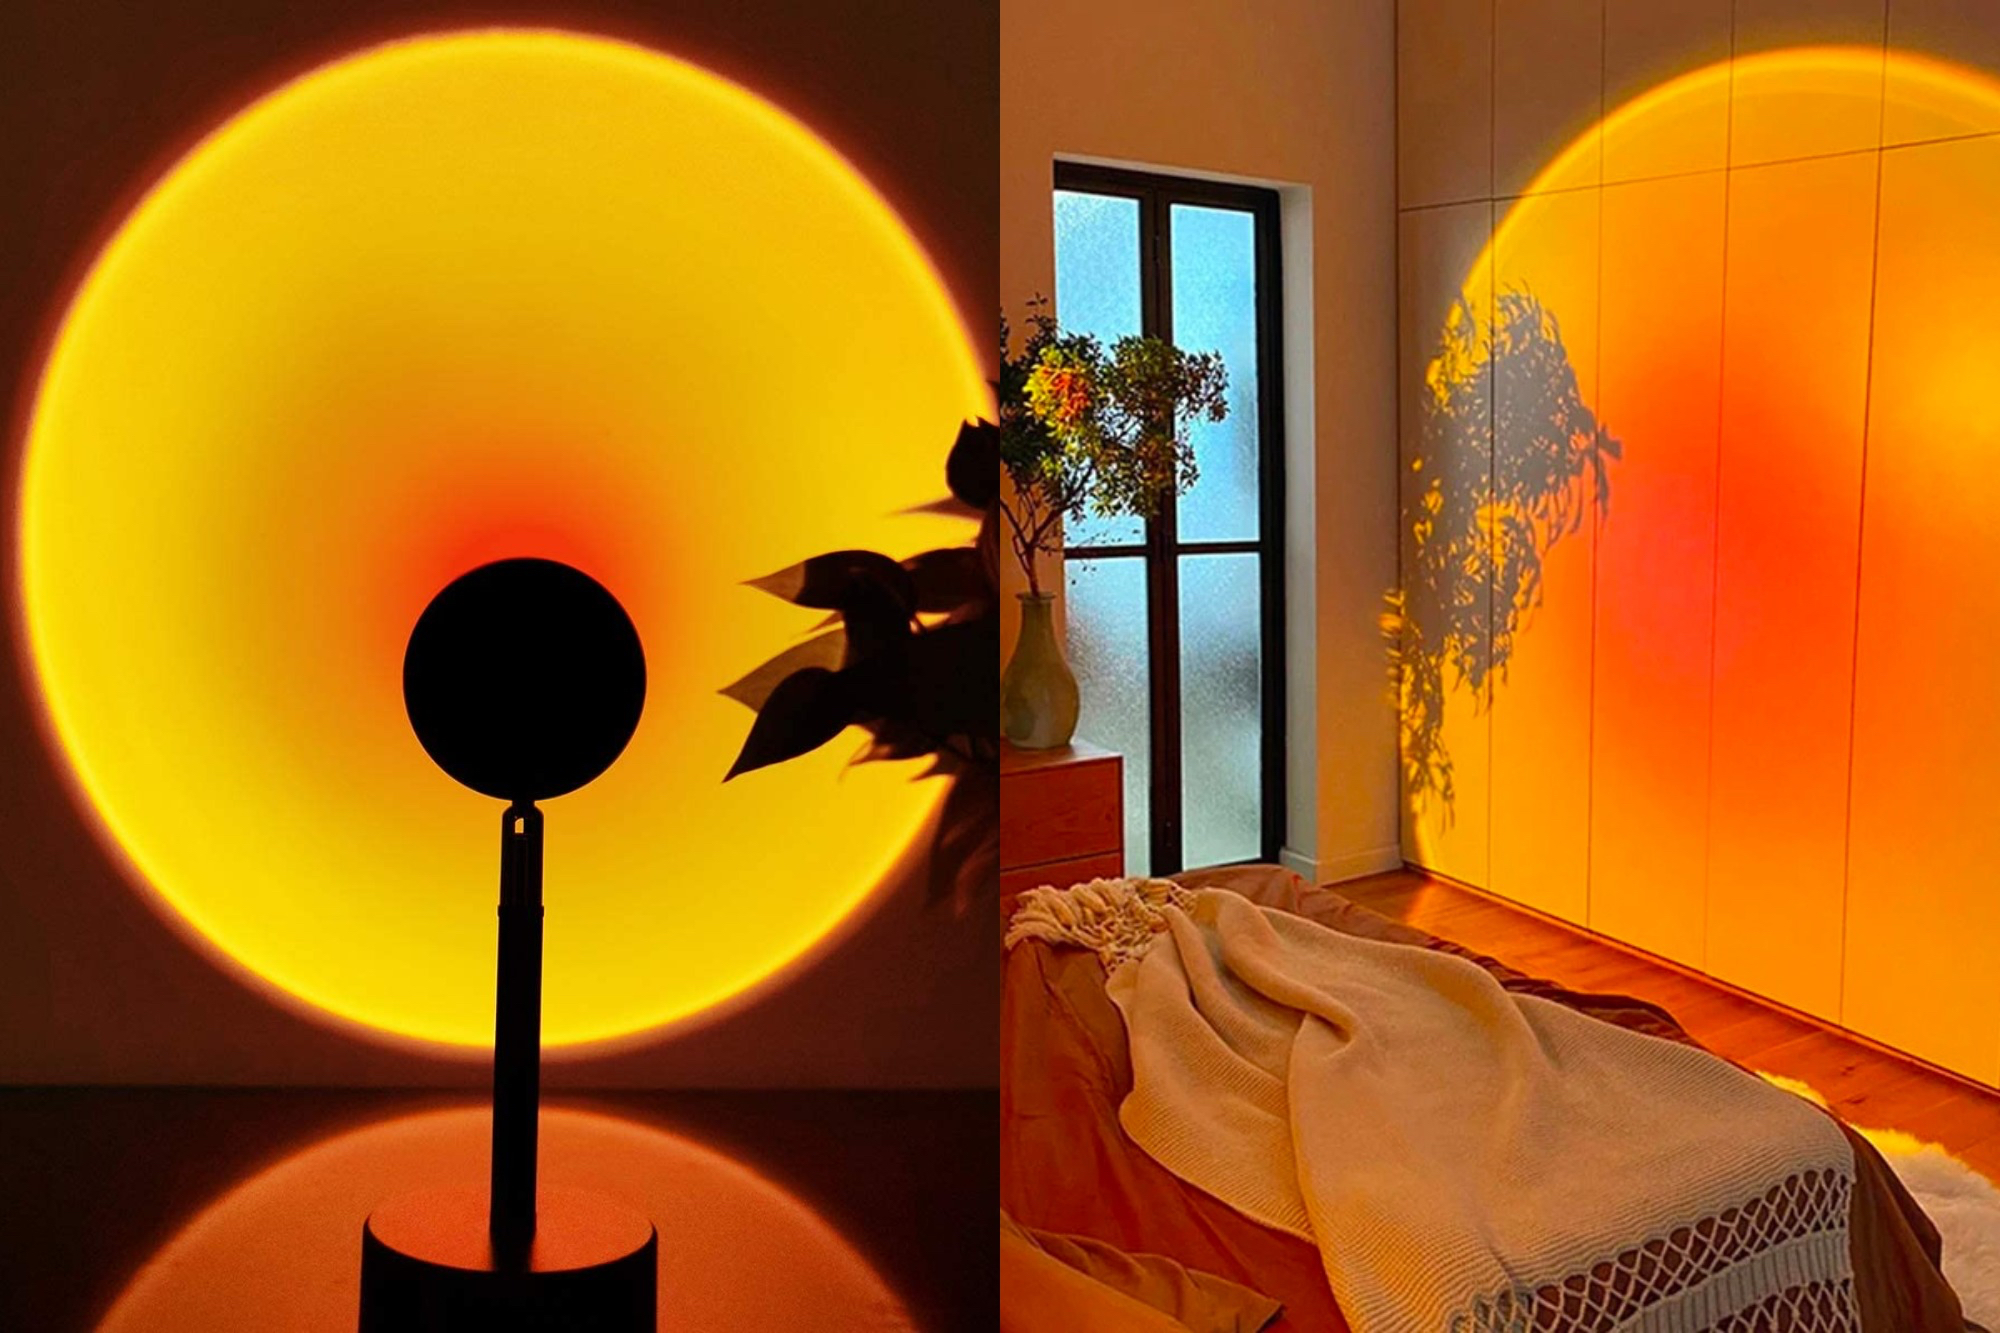 The Best Sunset Lamps As Seen On TikTok